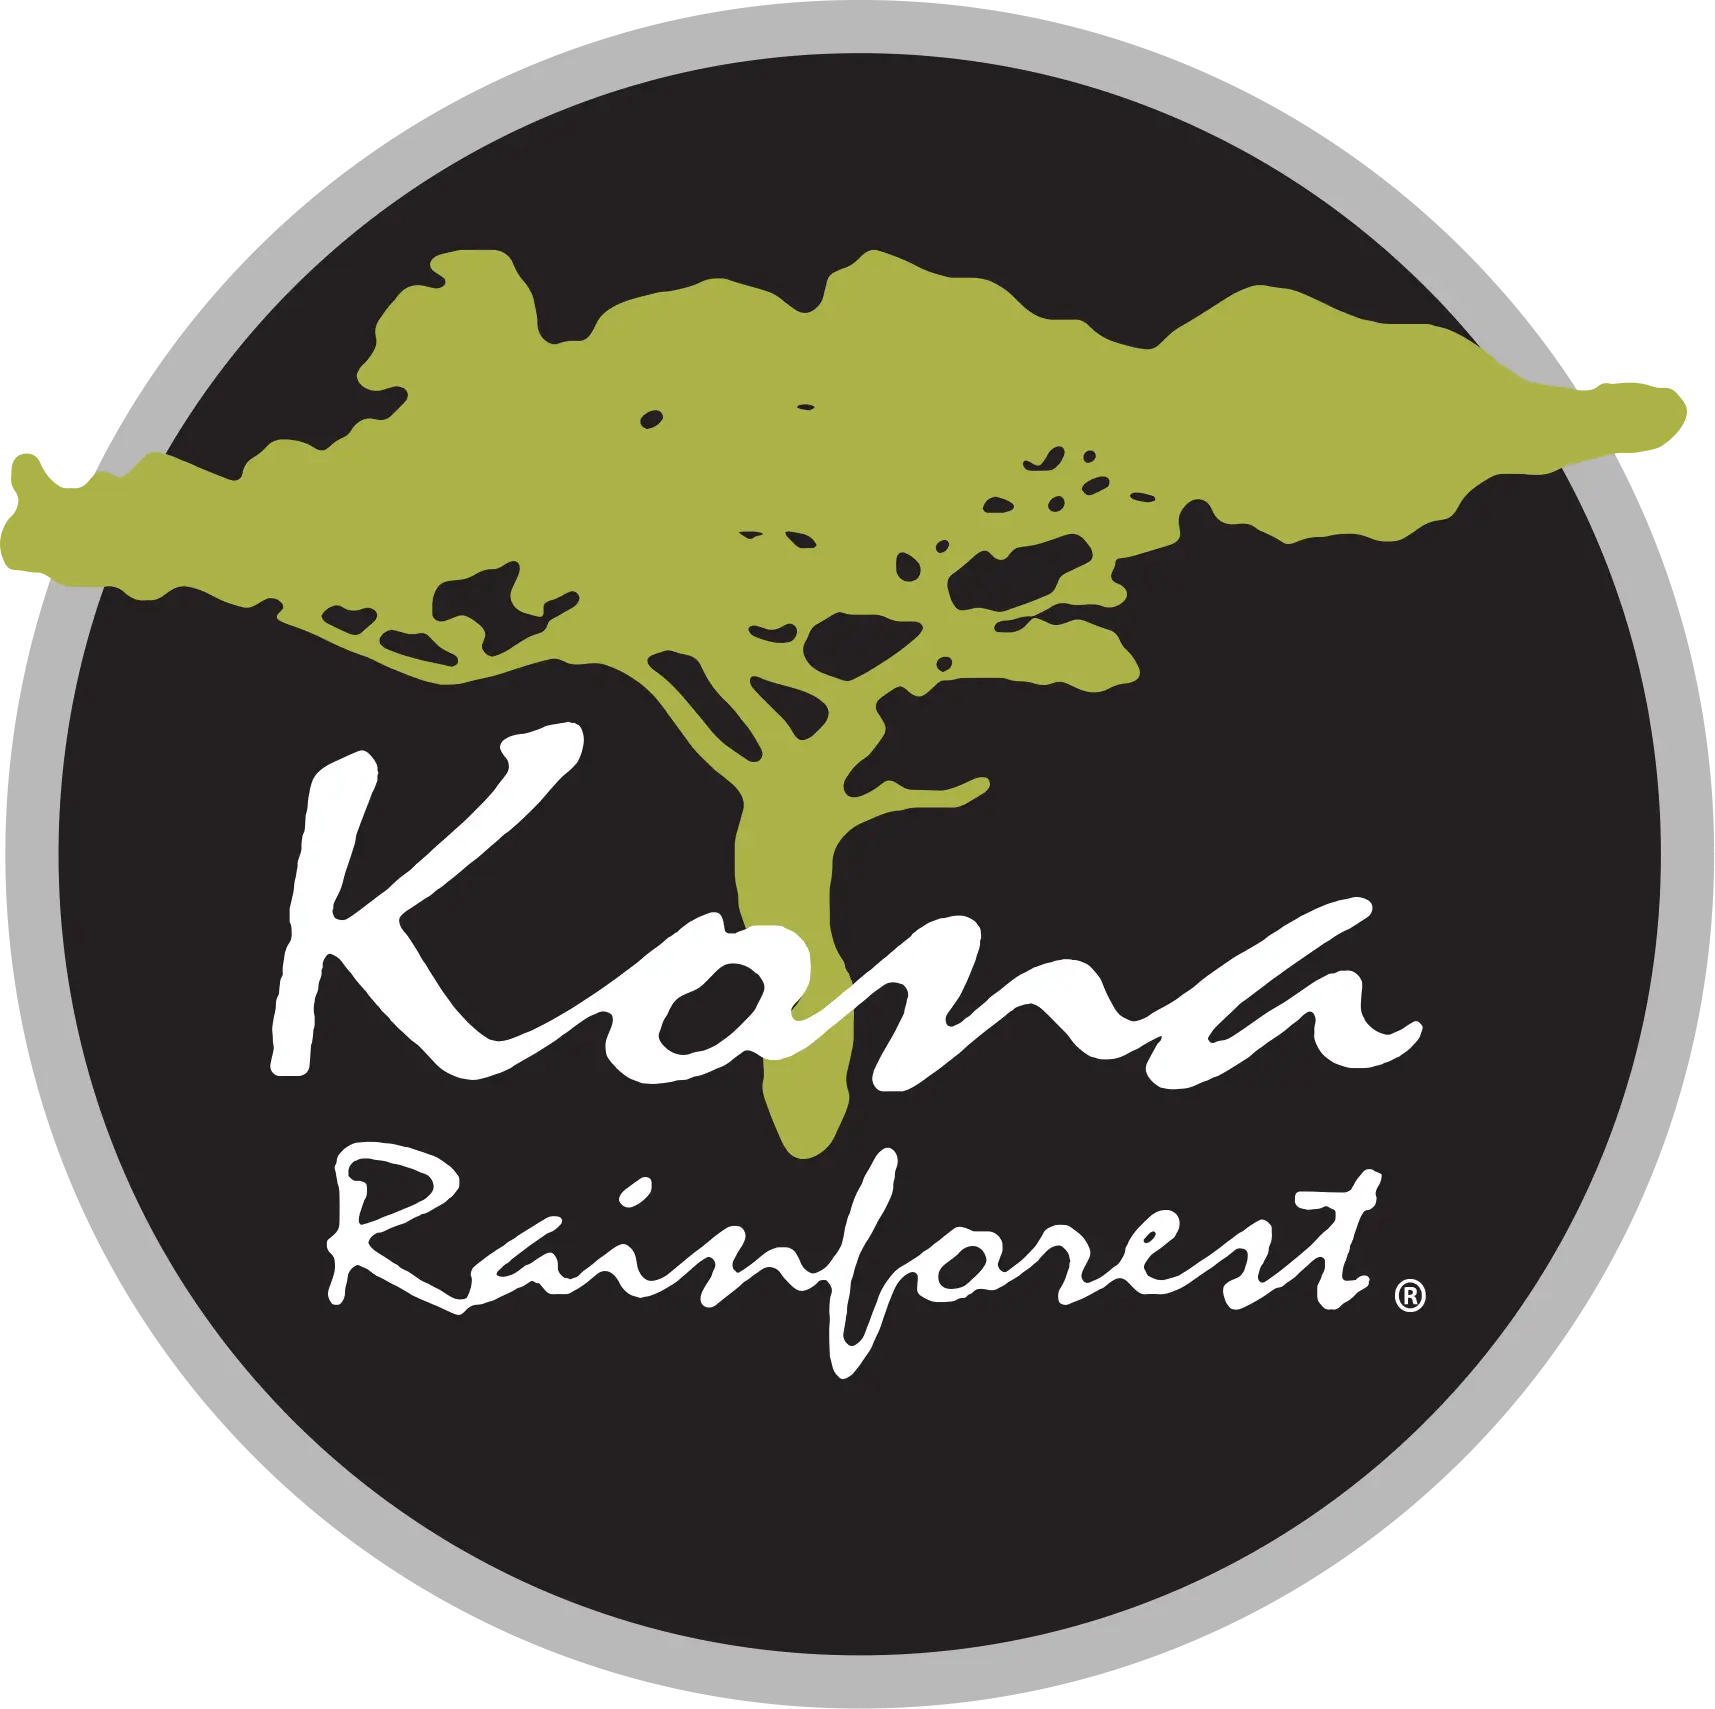 Kona Rainforest Coffee